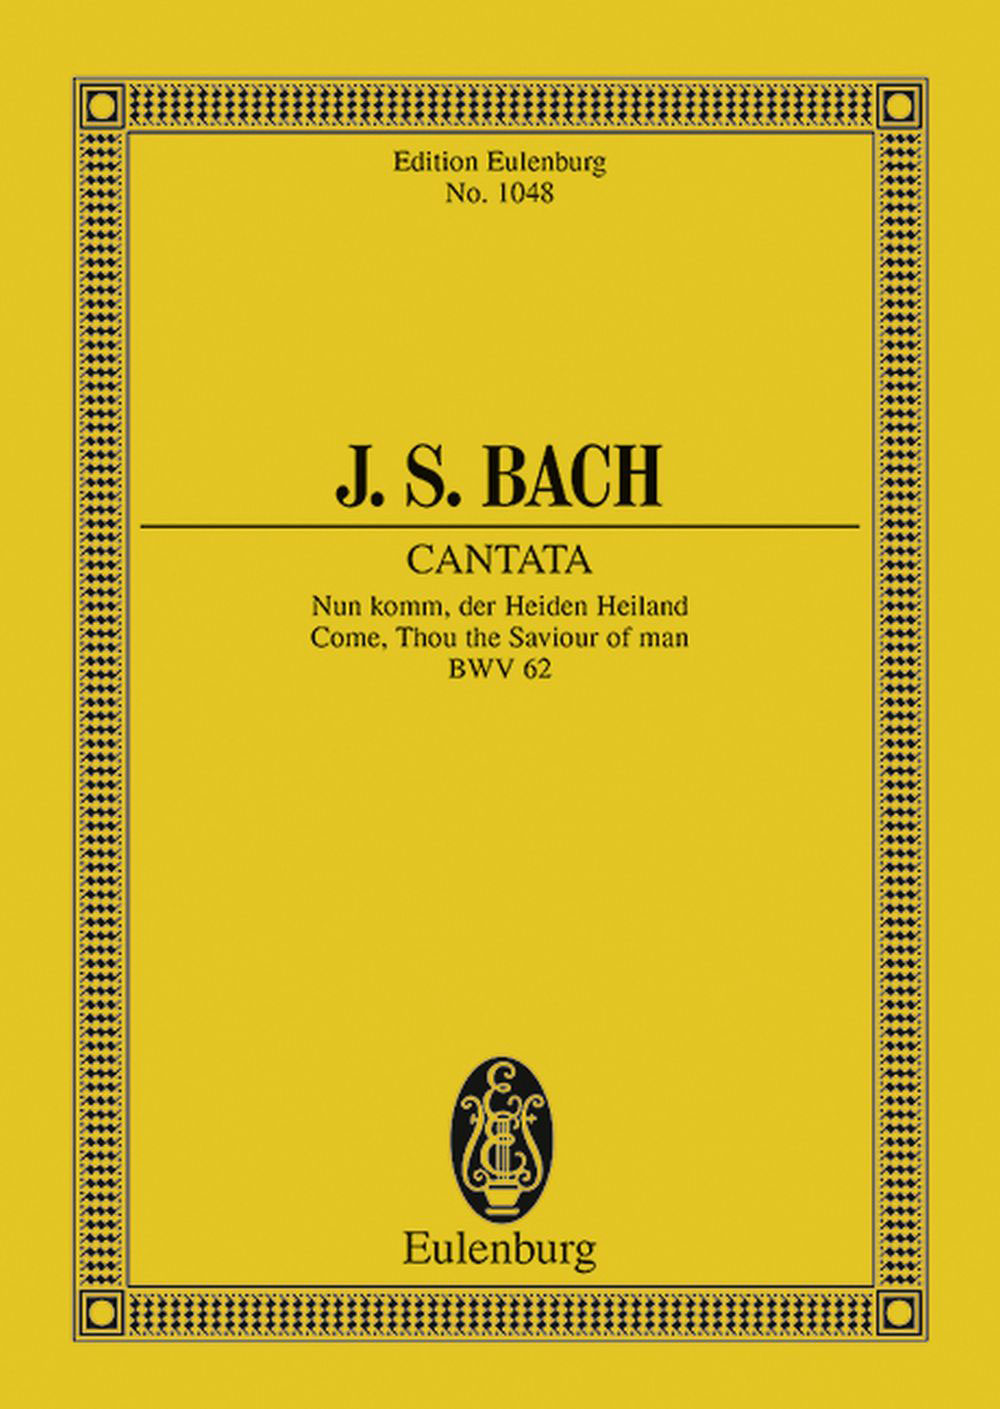 EULENBURG BACH J.S. - CANTATA NO.62 (ADVENTUS CHRISTI) BWV 62 - 3 SOLO PARTS, CHOIR AND ORCHESTRA